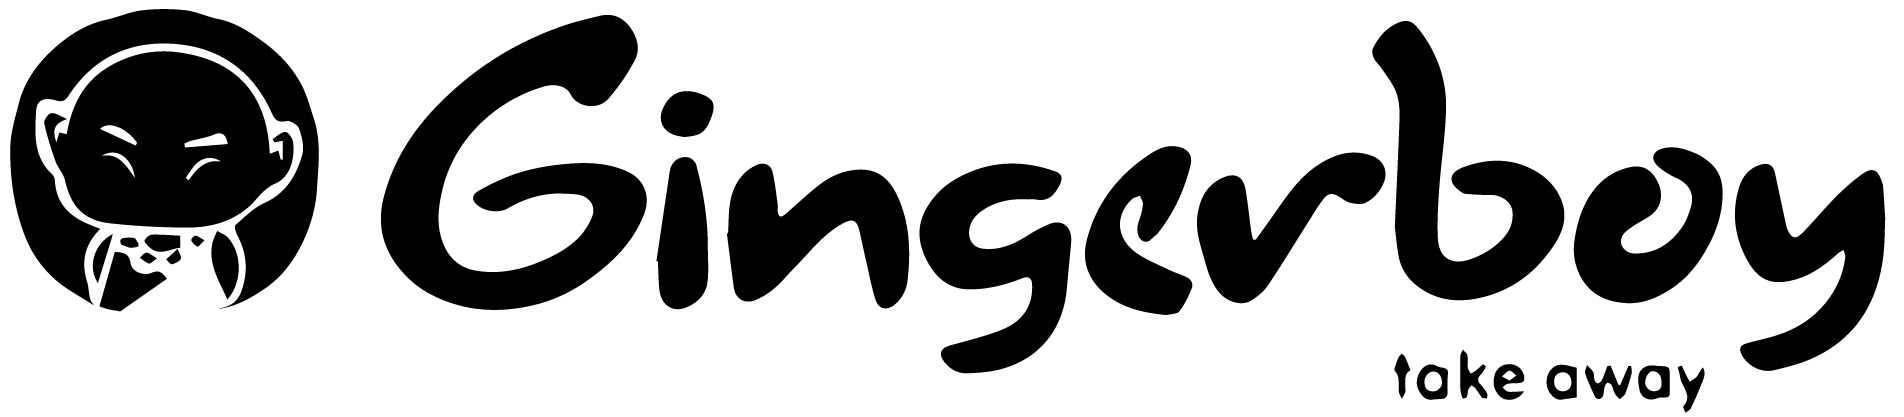 Logo Ginger Boy - Cliente Auditecnic